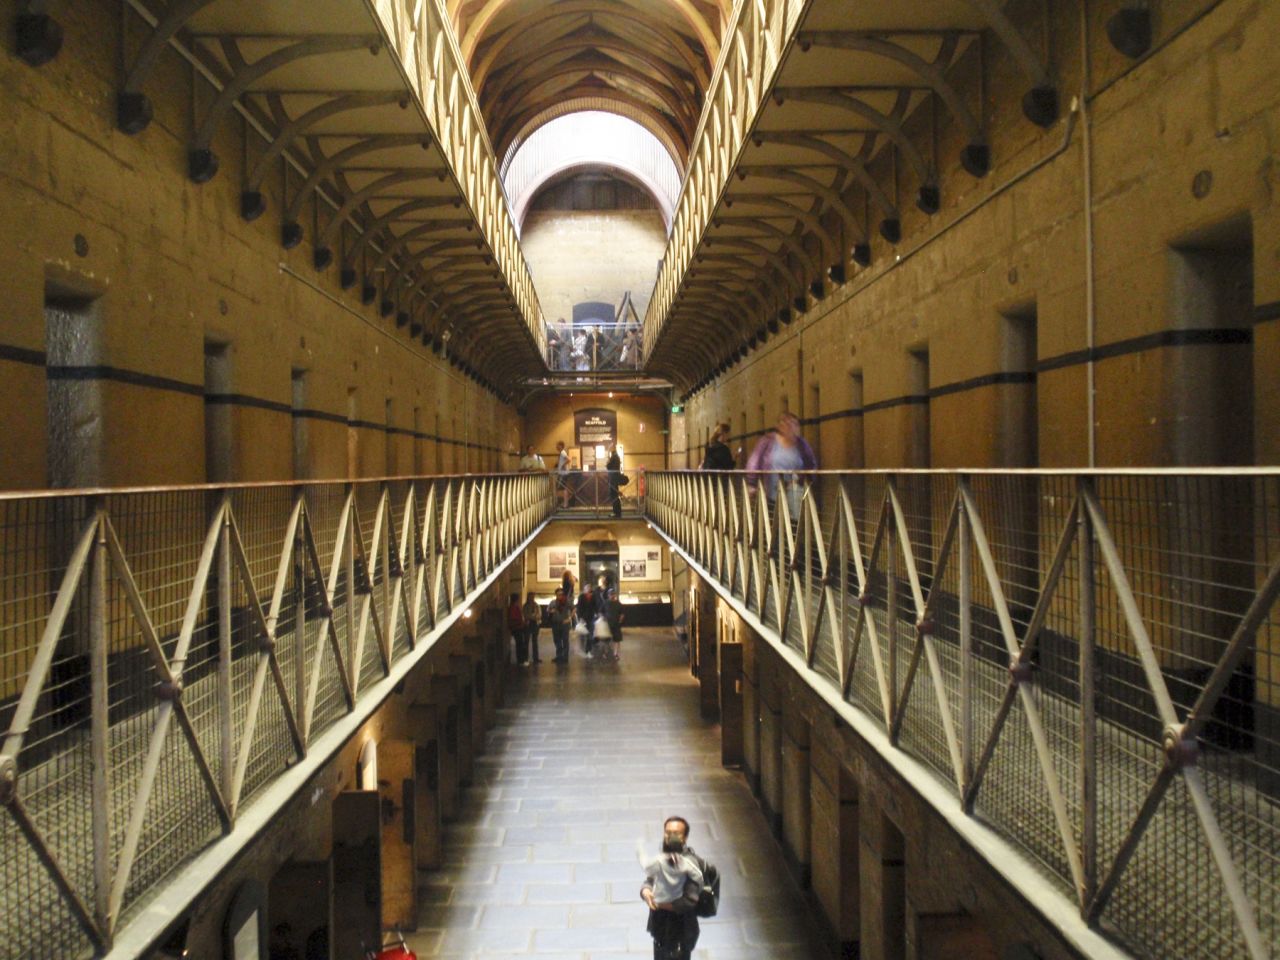 Grim view inside Old Melbourne Gaol.